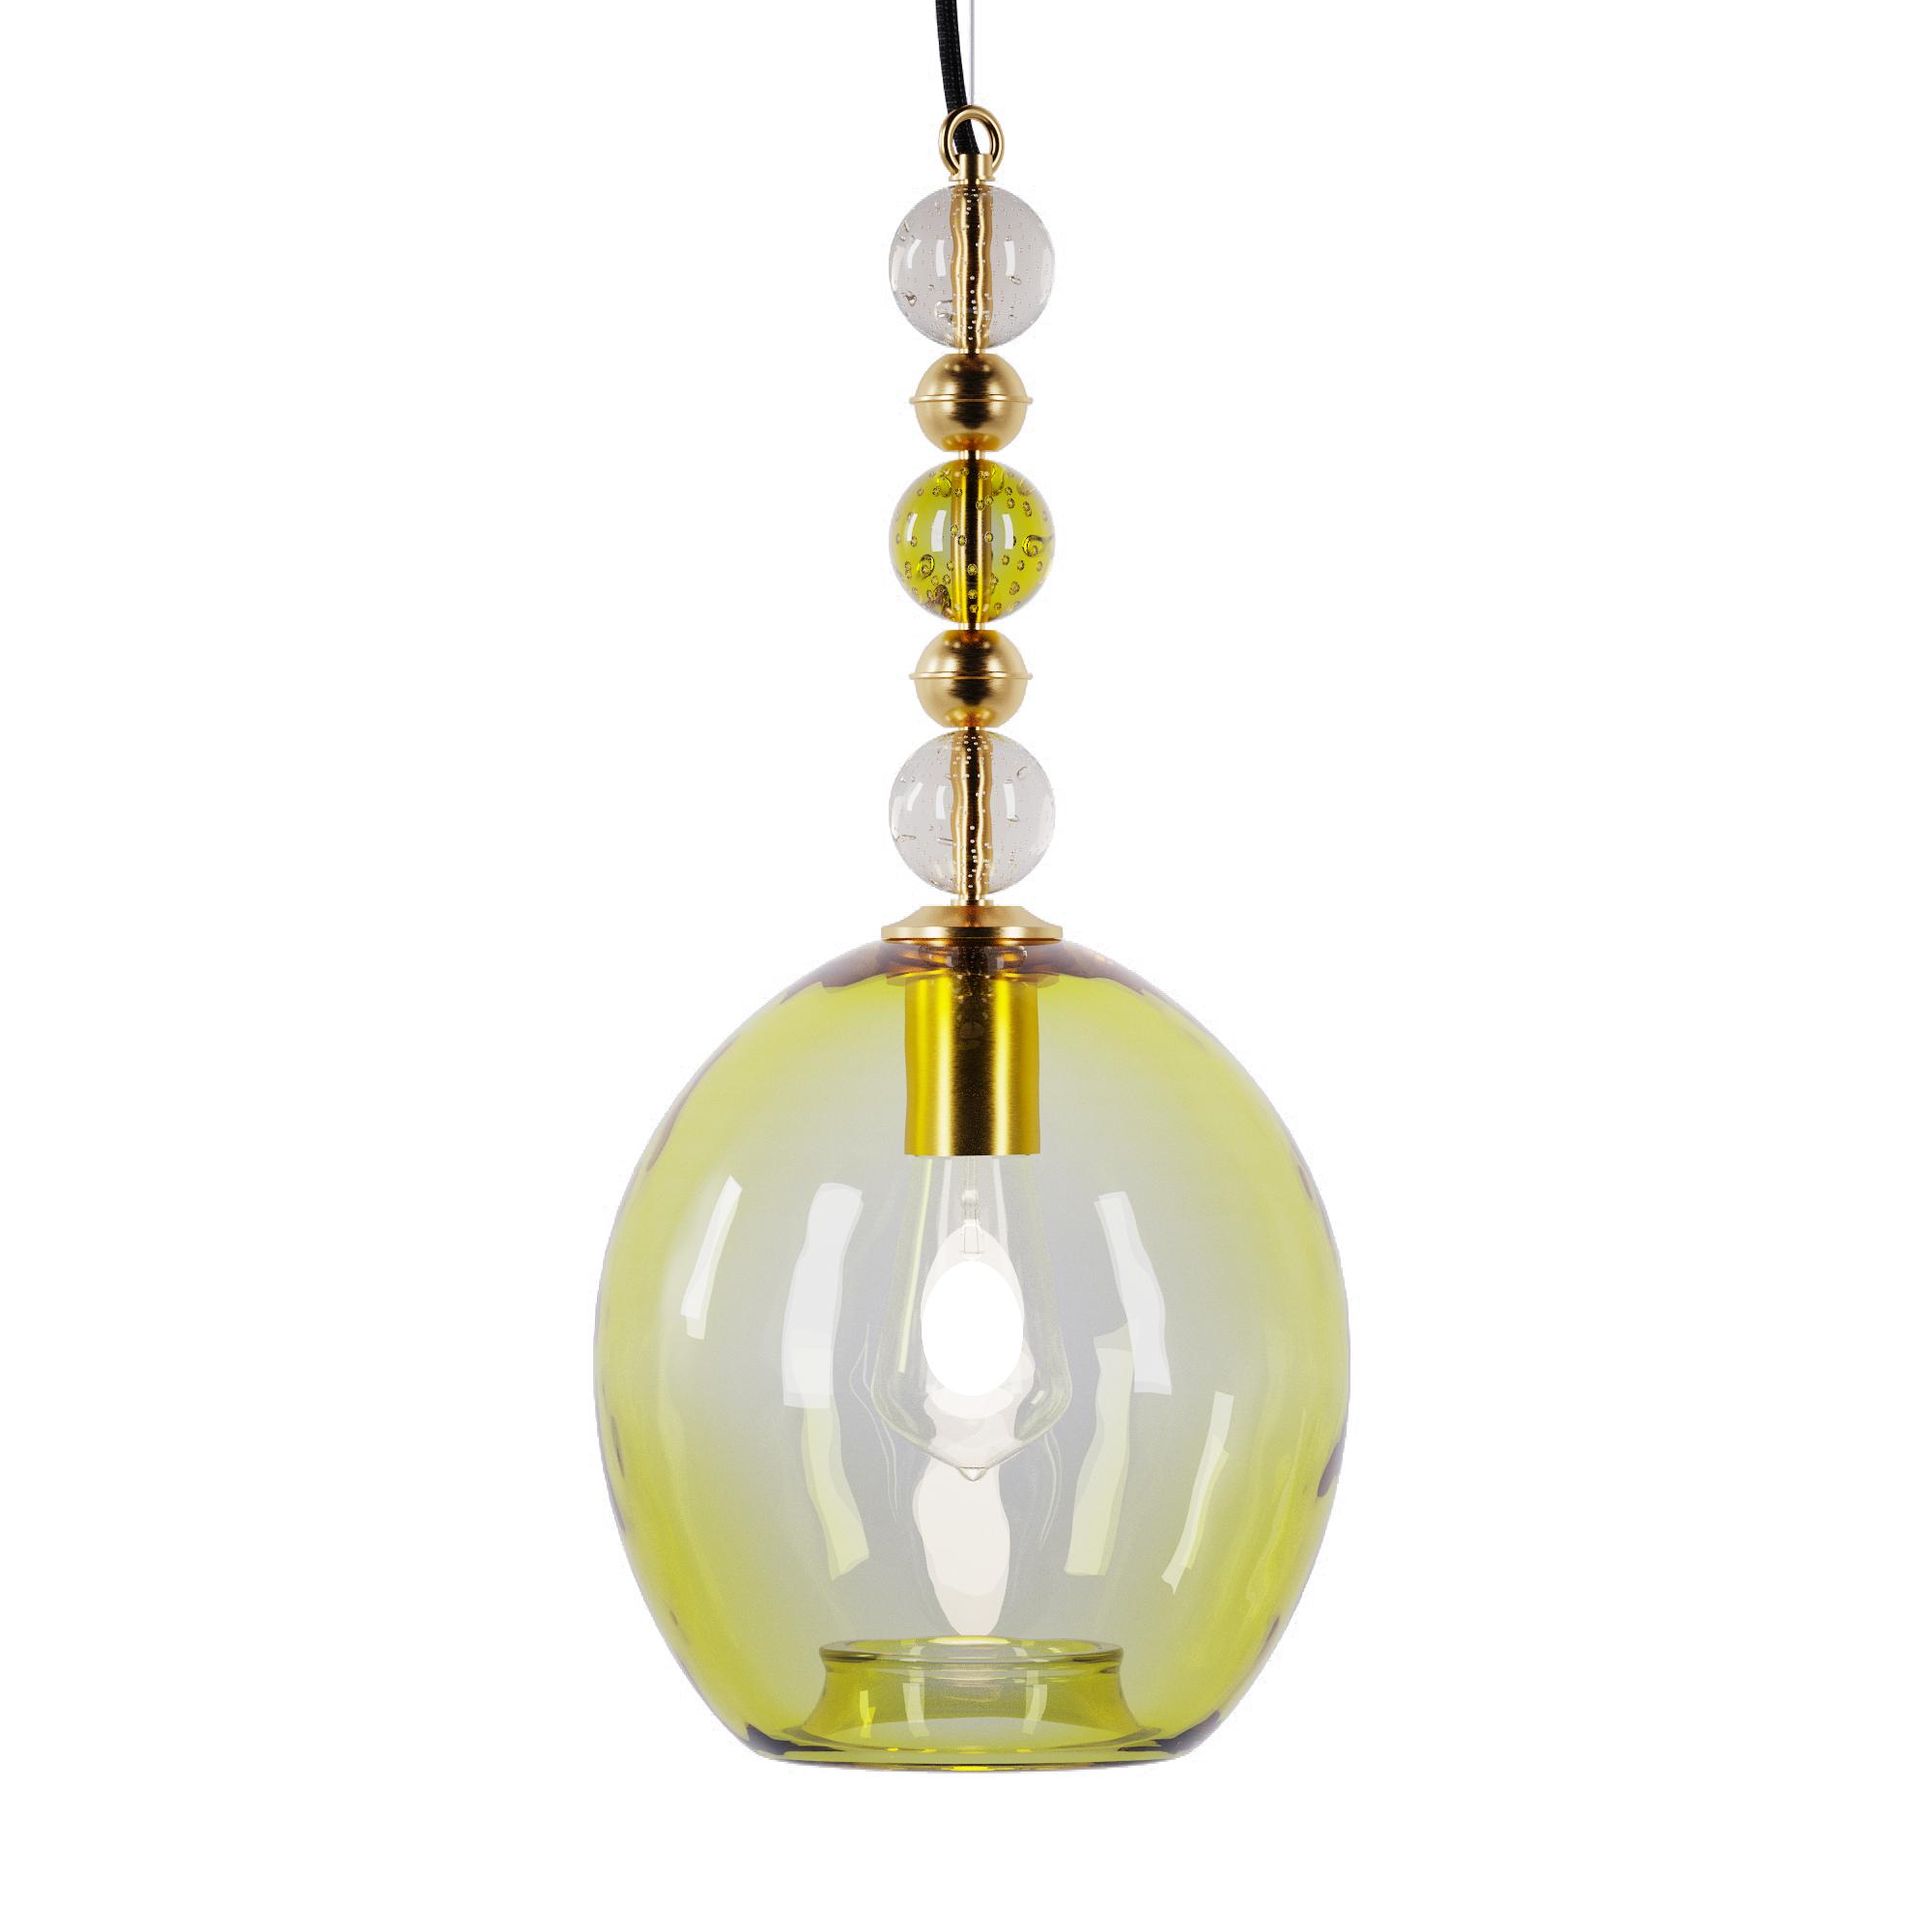 Colorglass Balls lamp, SKU. 25434 by Pikartlights 3d model